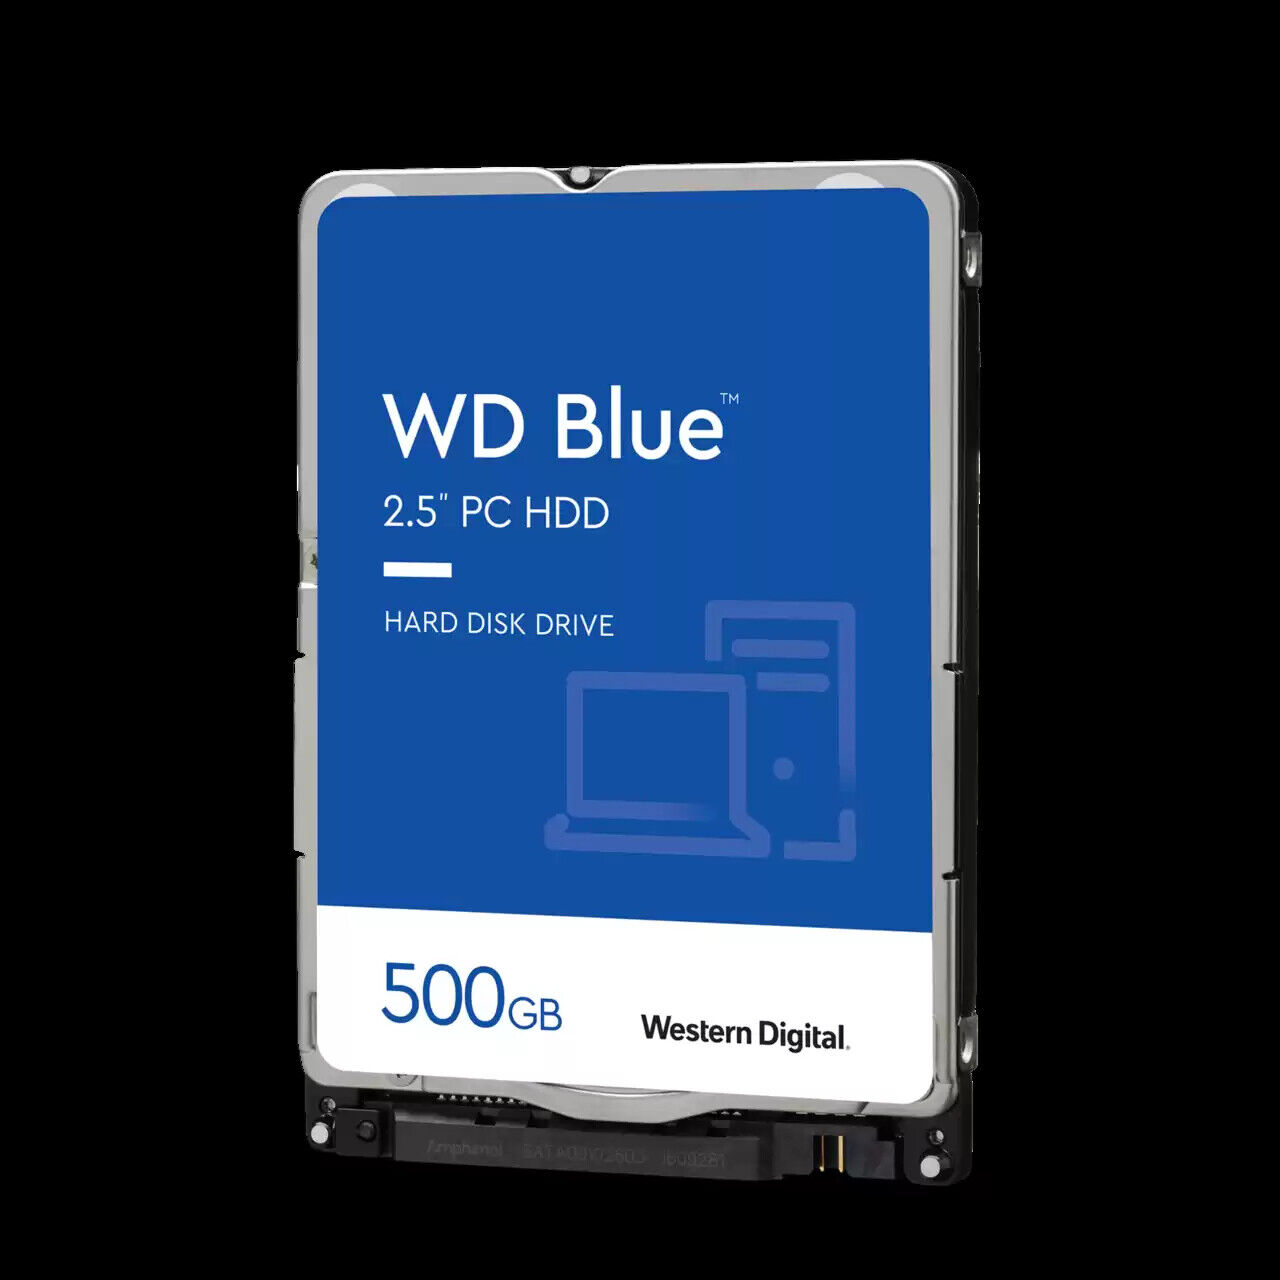 Western Digital 500GB WD Blue PC Mobile Hard Drive, 2.5'' SMR - WD5000LPZX